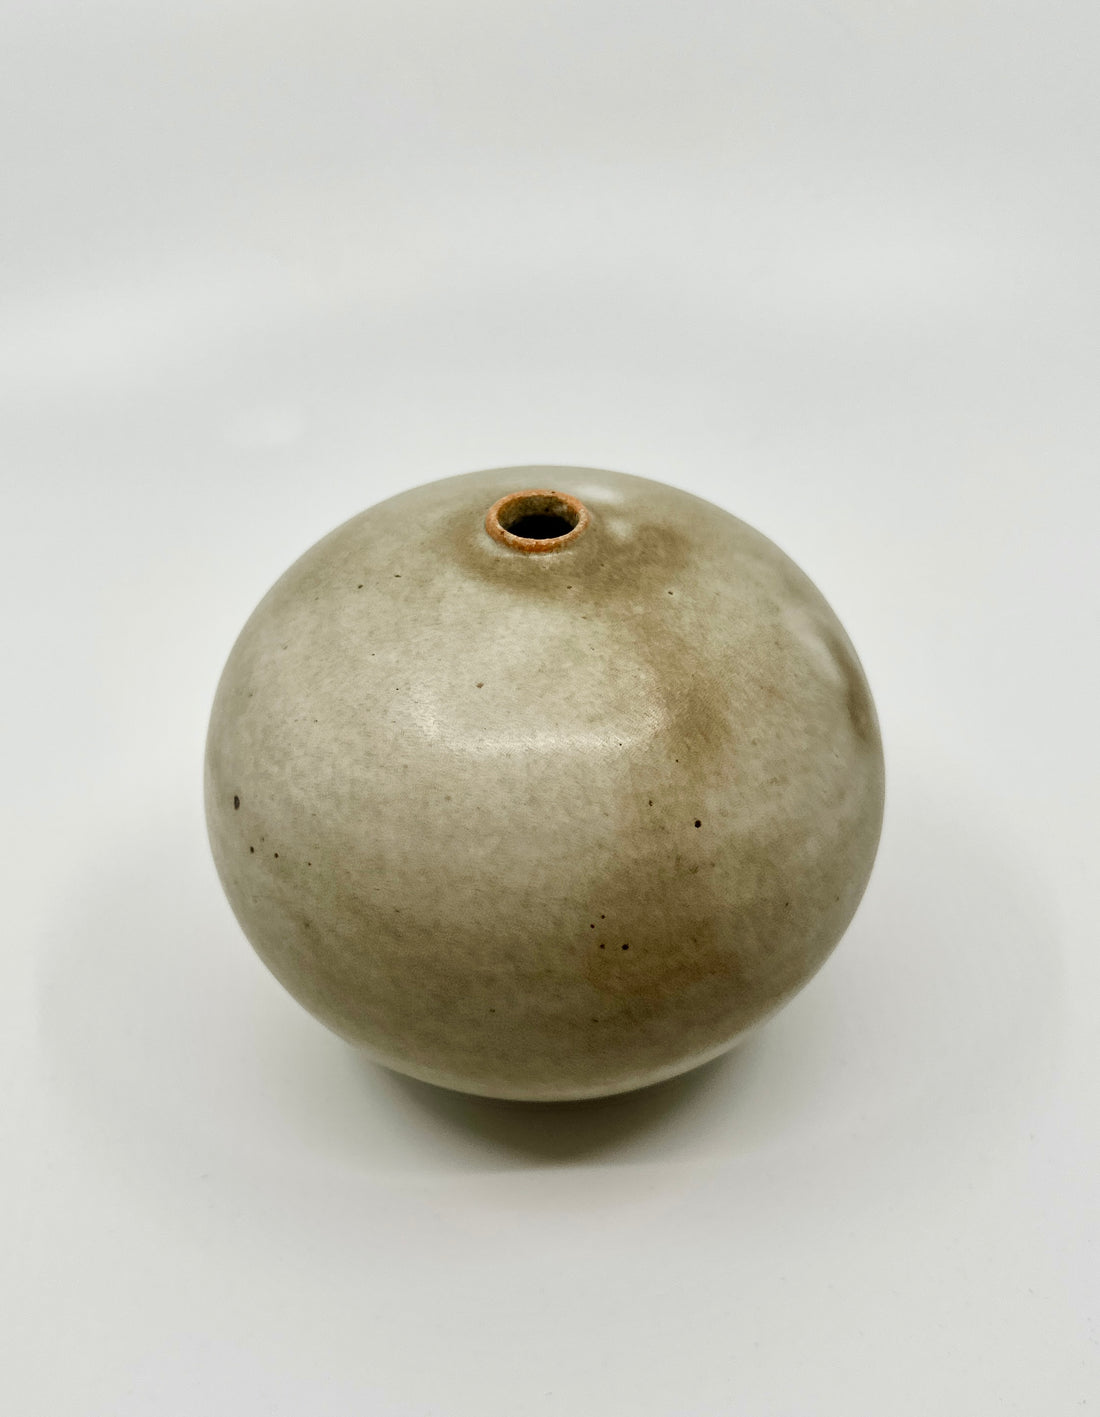 Gray/tan orb no. 28